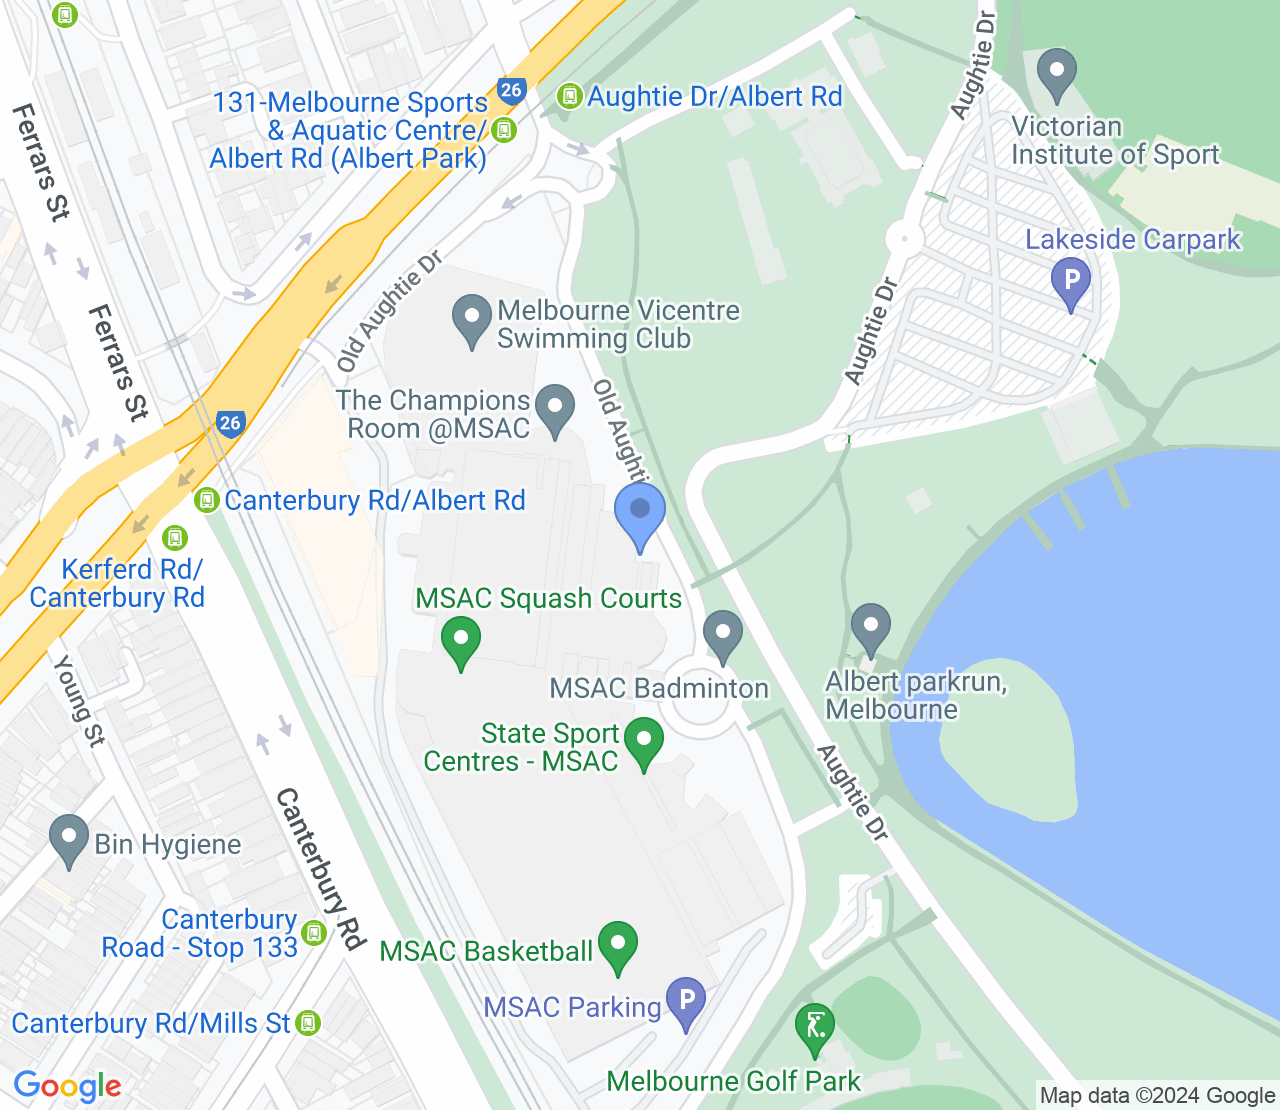 Google Maps image of Melbourne Sports and Aquatic Centre